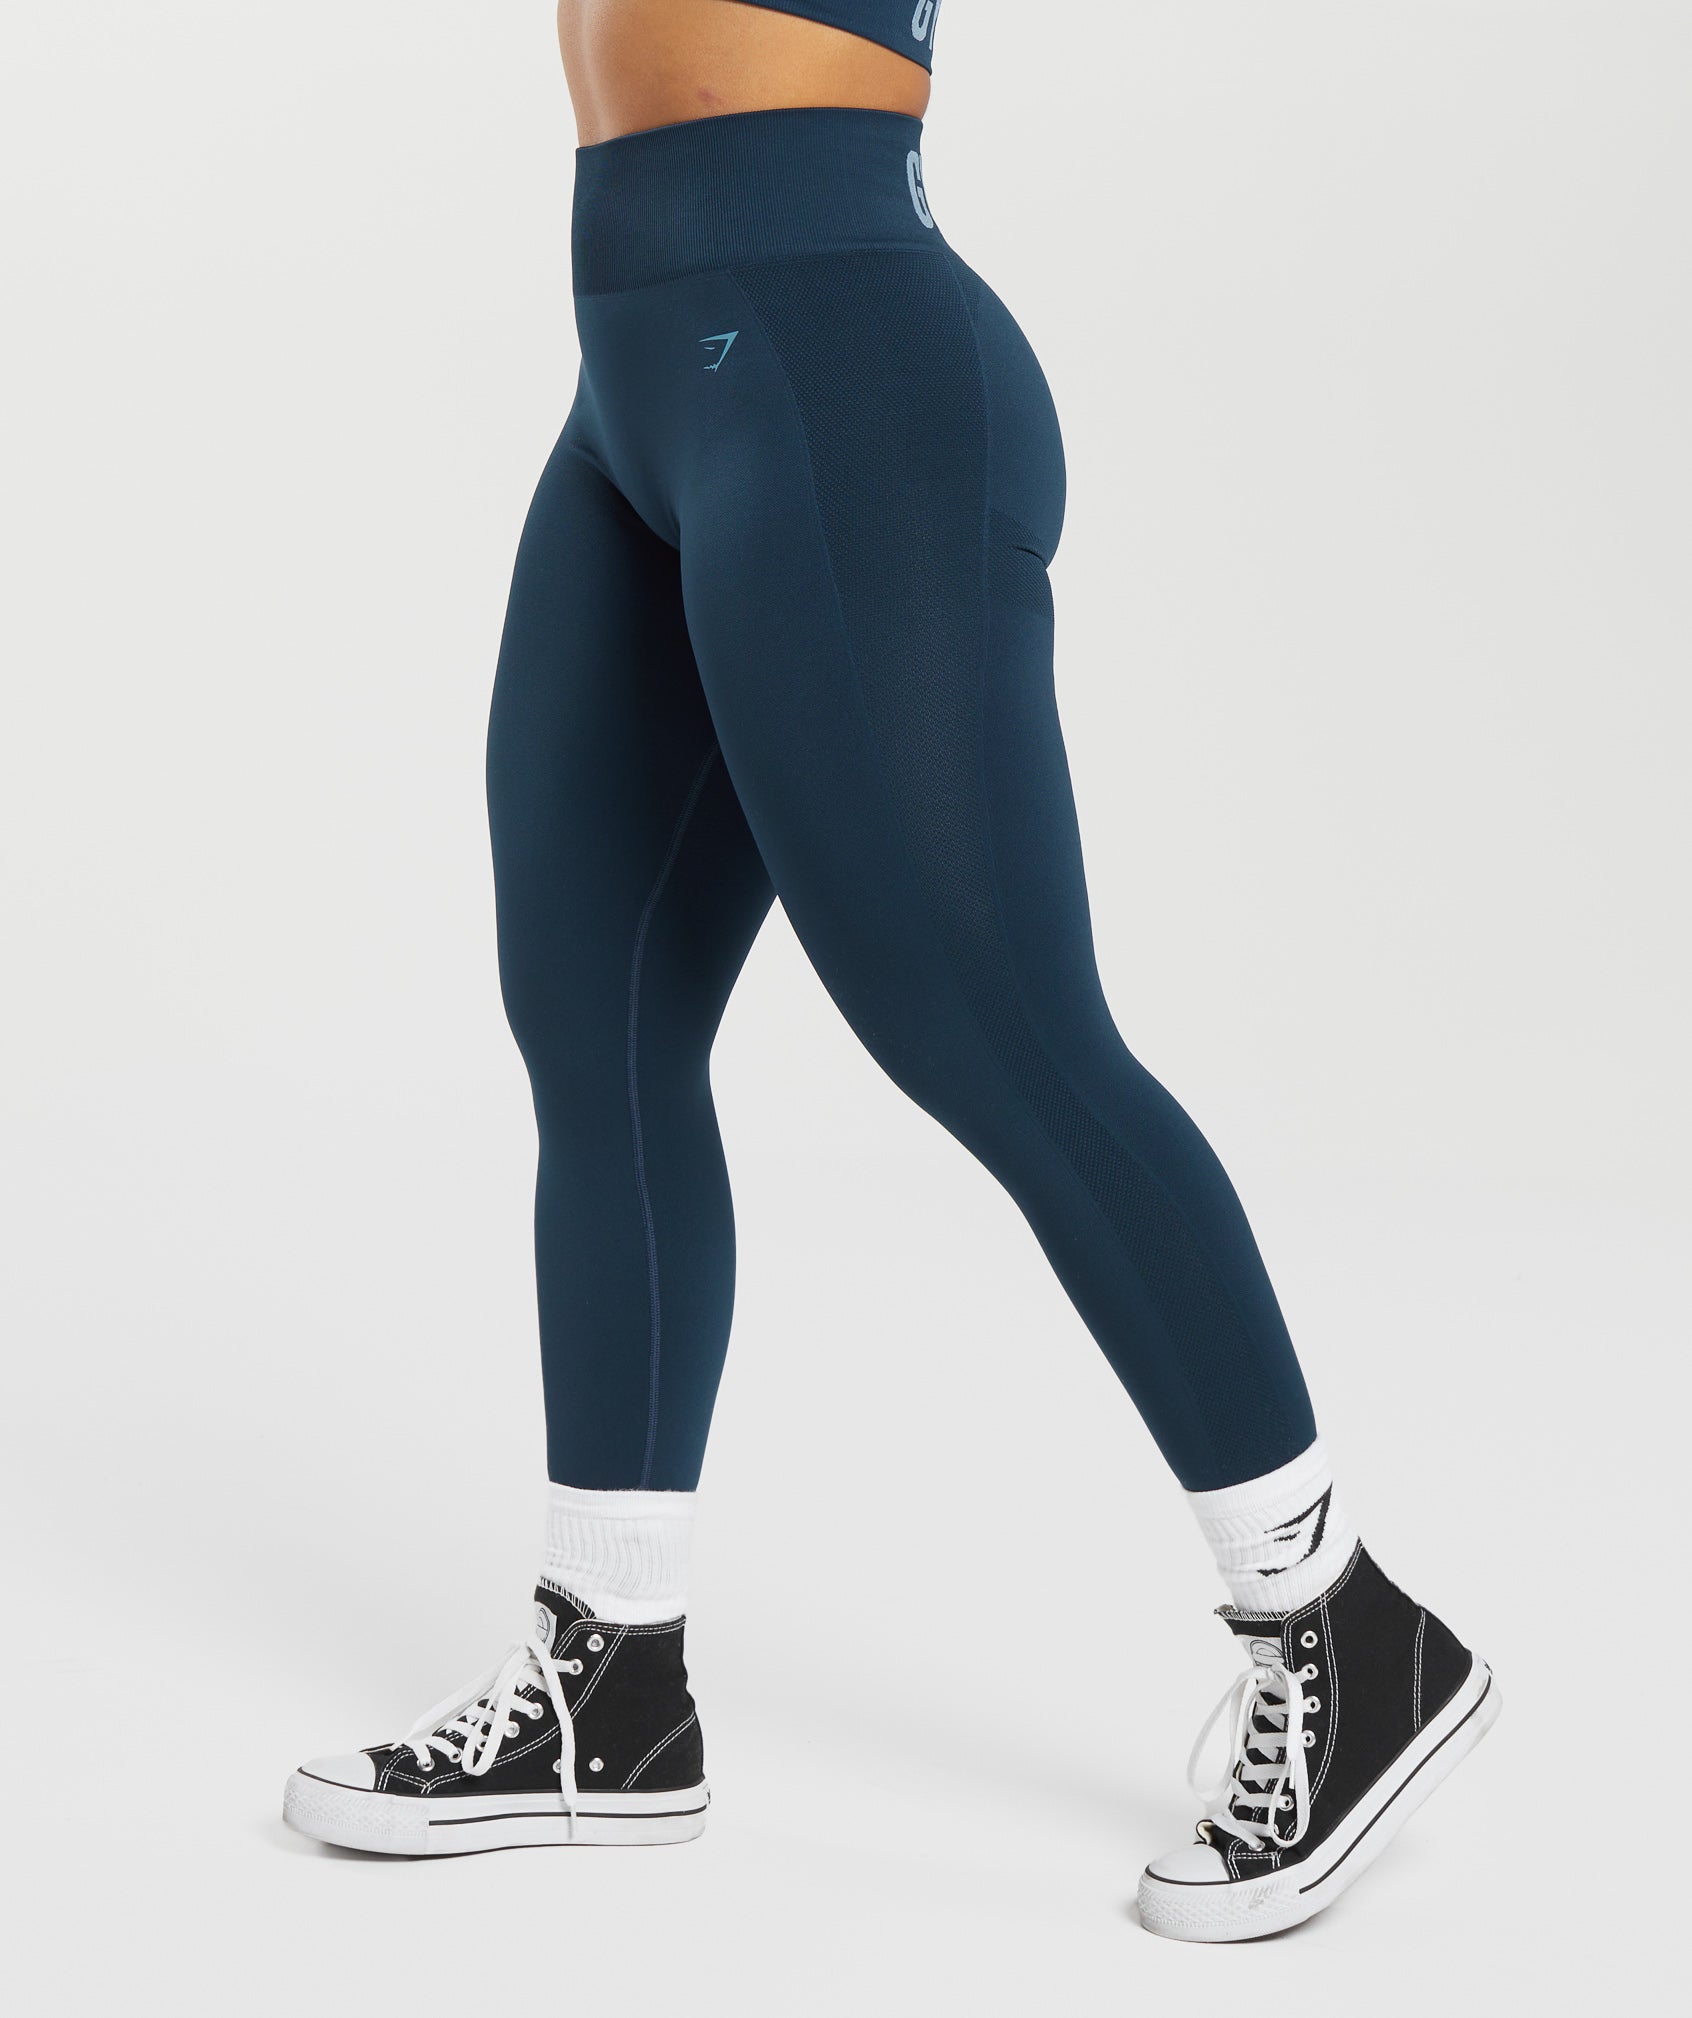 Buy Navy Blue Leggings for Women by PERFORMAX Online